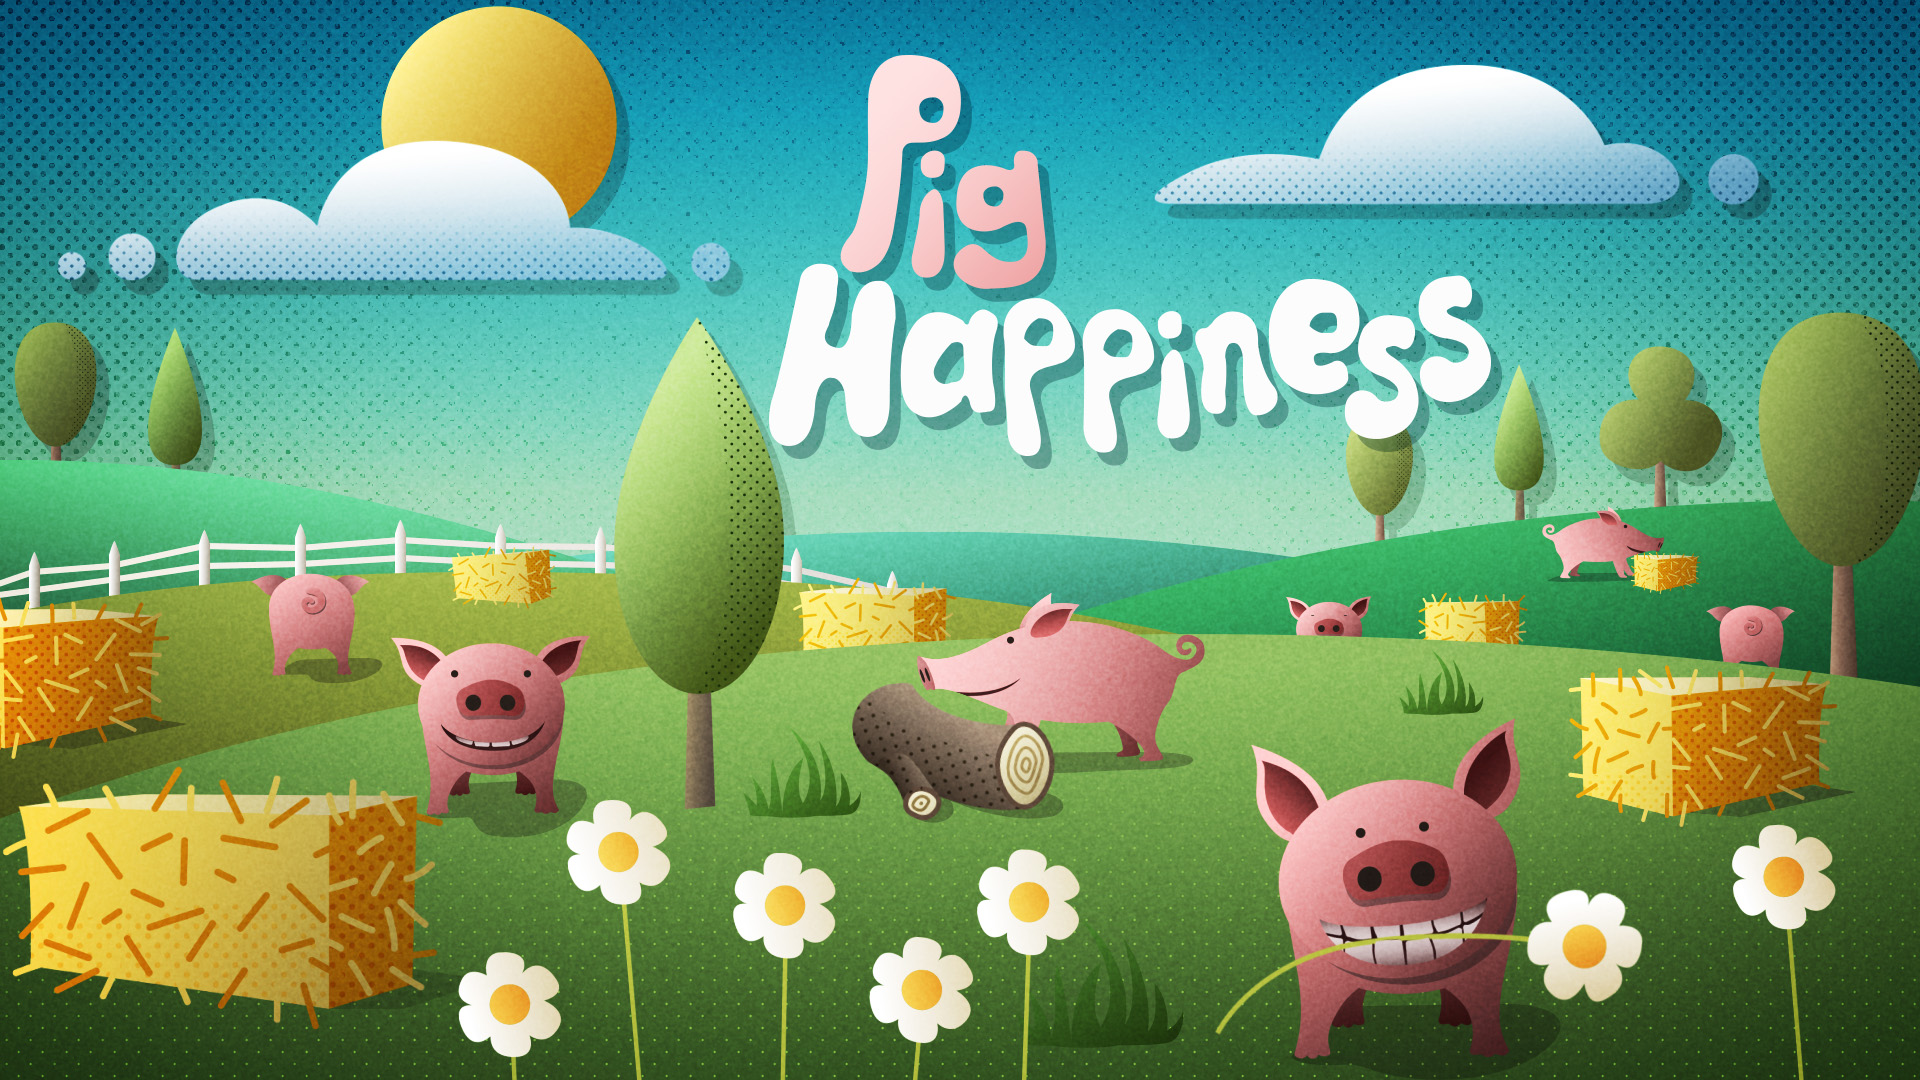 Pig-Happiness, the new awareness campaign by the Organic PrimaVera line of Salumificio Pedrazzoli.